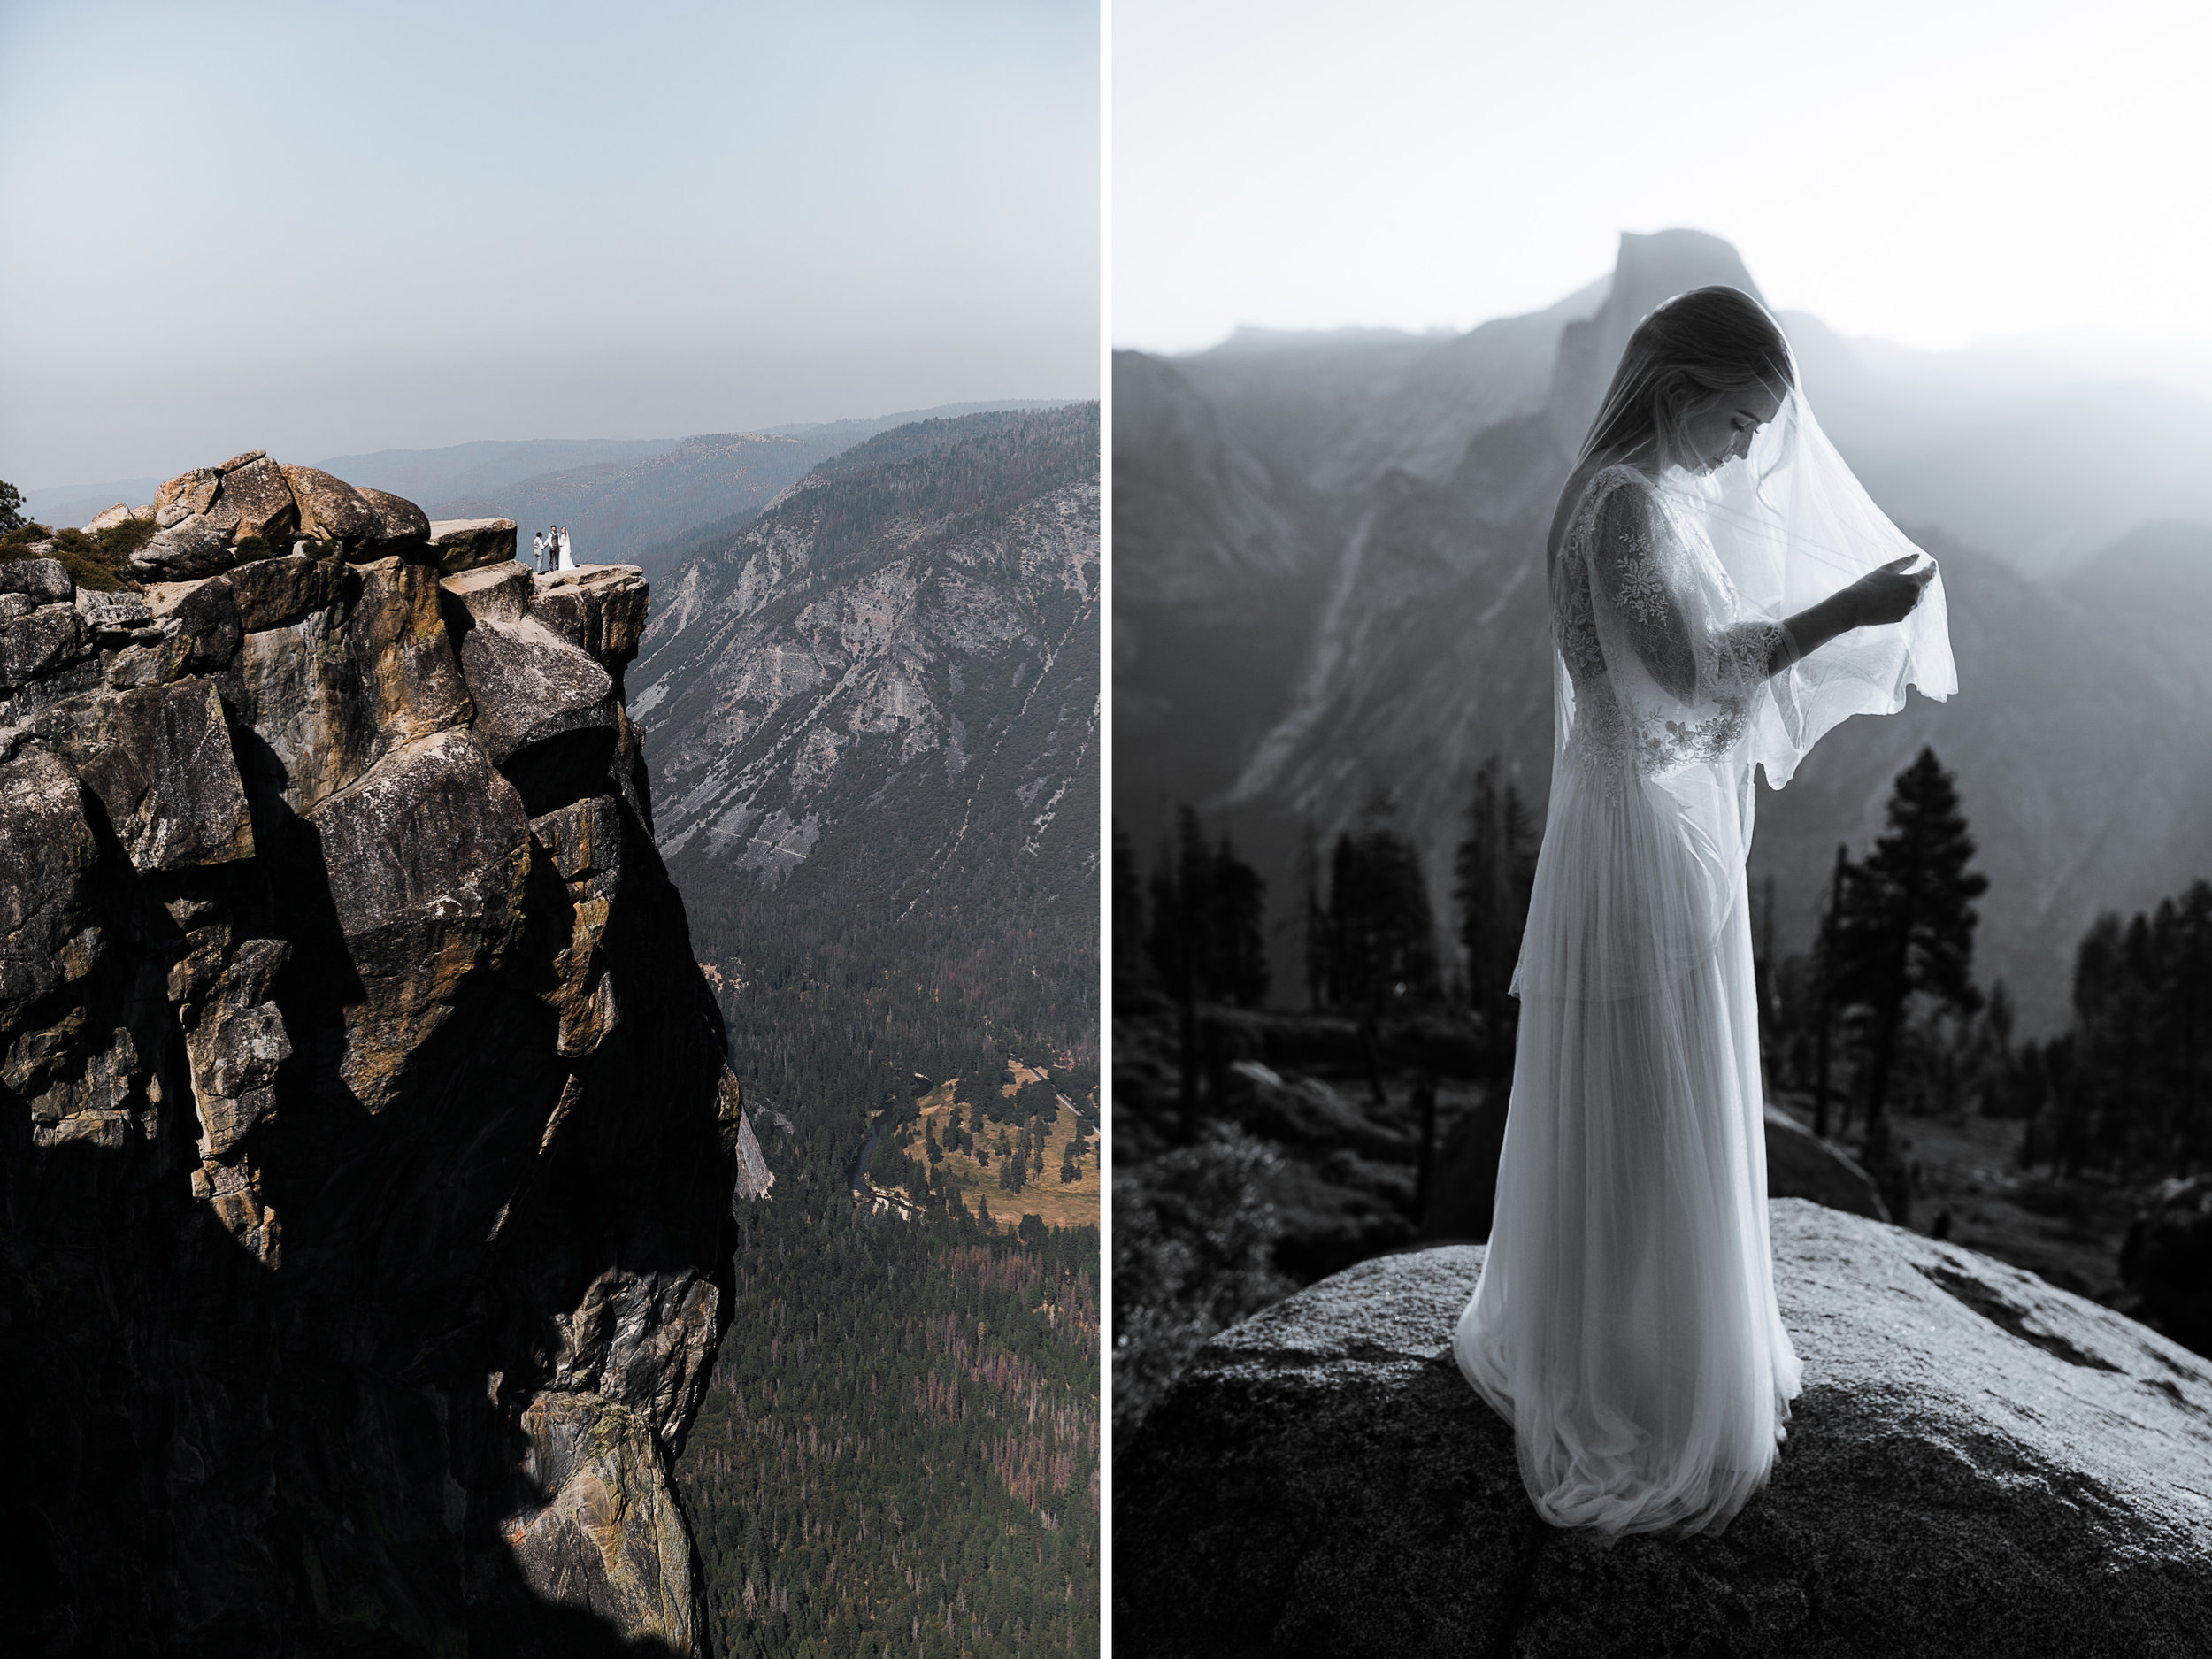 sunrise elopement in yosemite national park | wedding portraits at glacier point | wedding ceremony at taft point | adventure elopement photographer